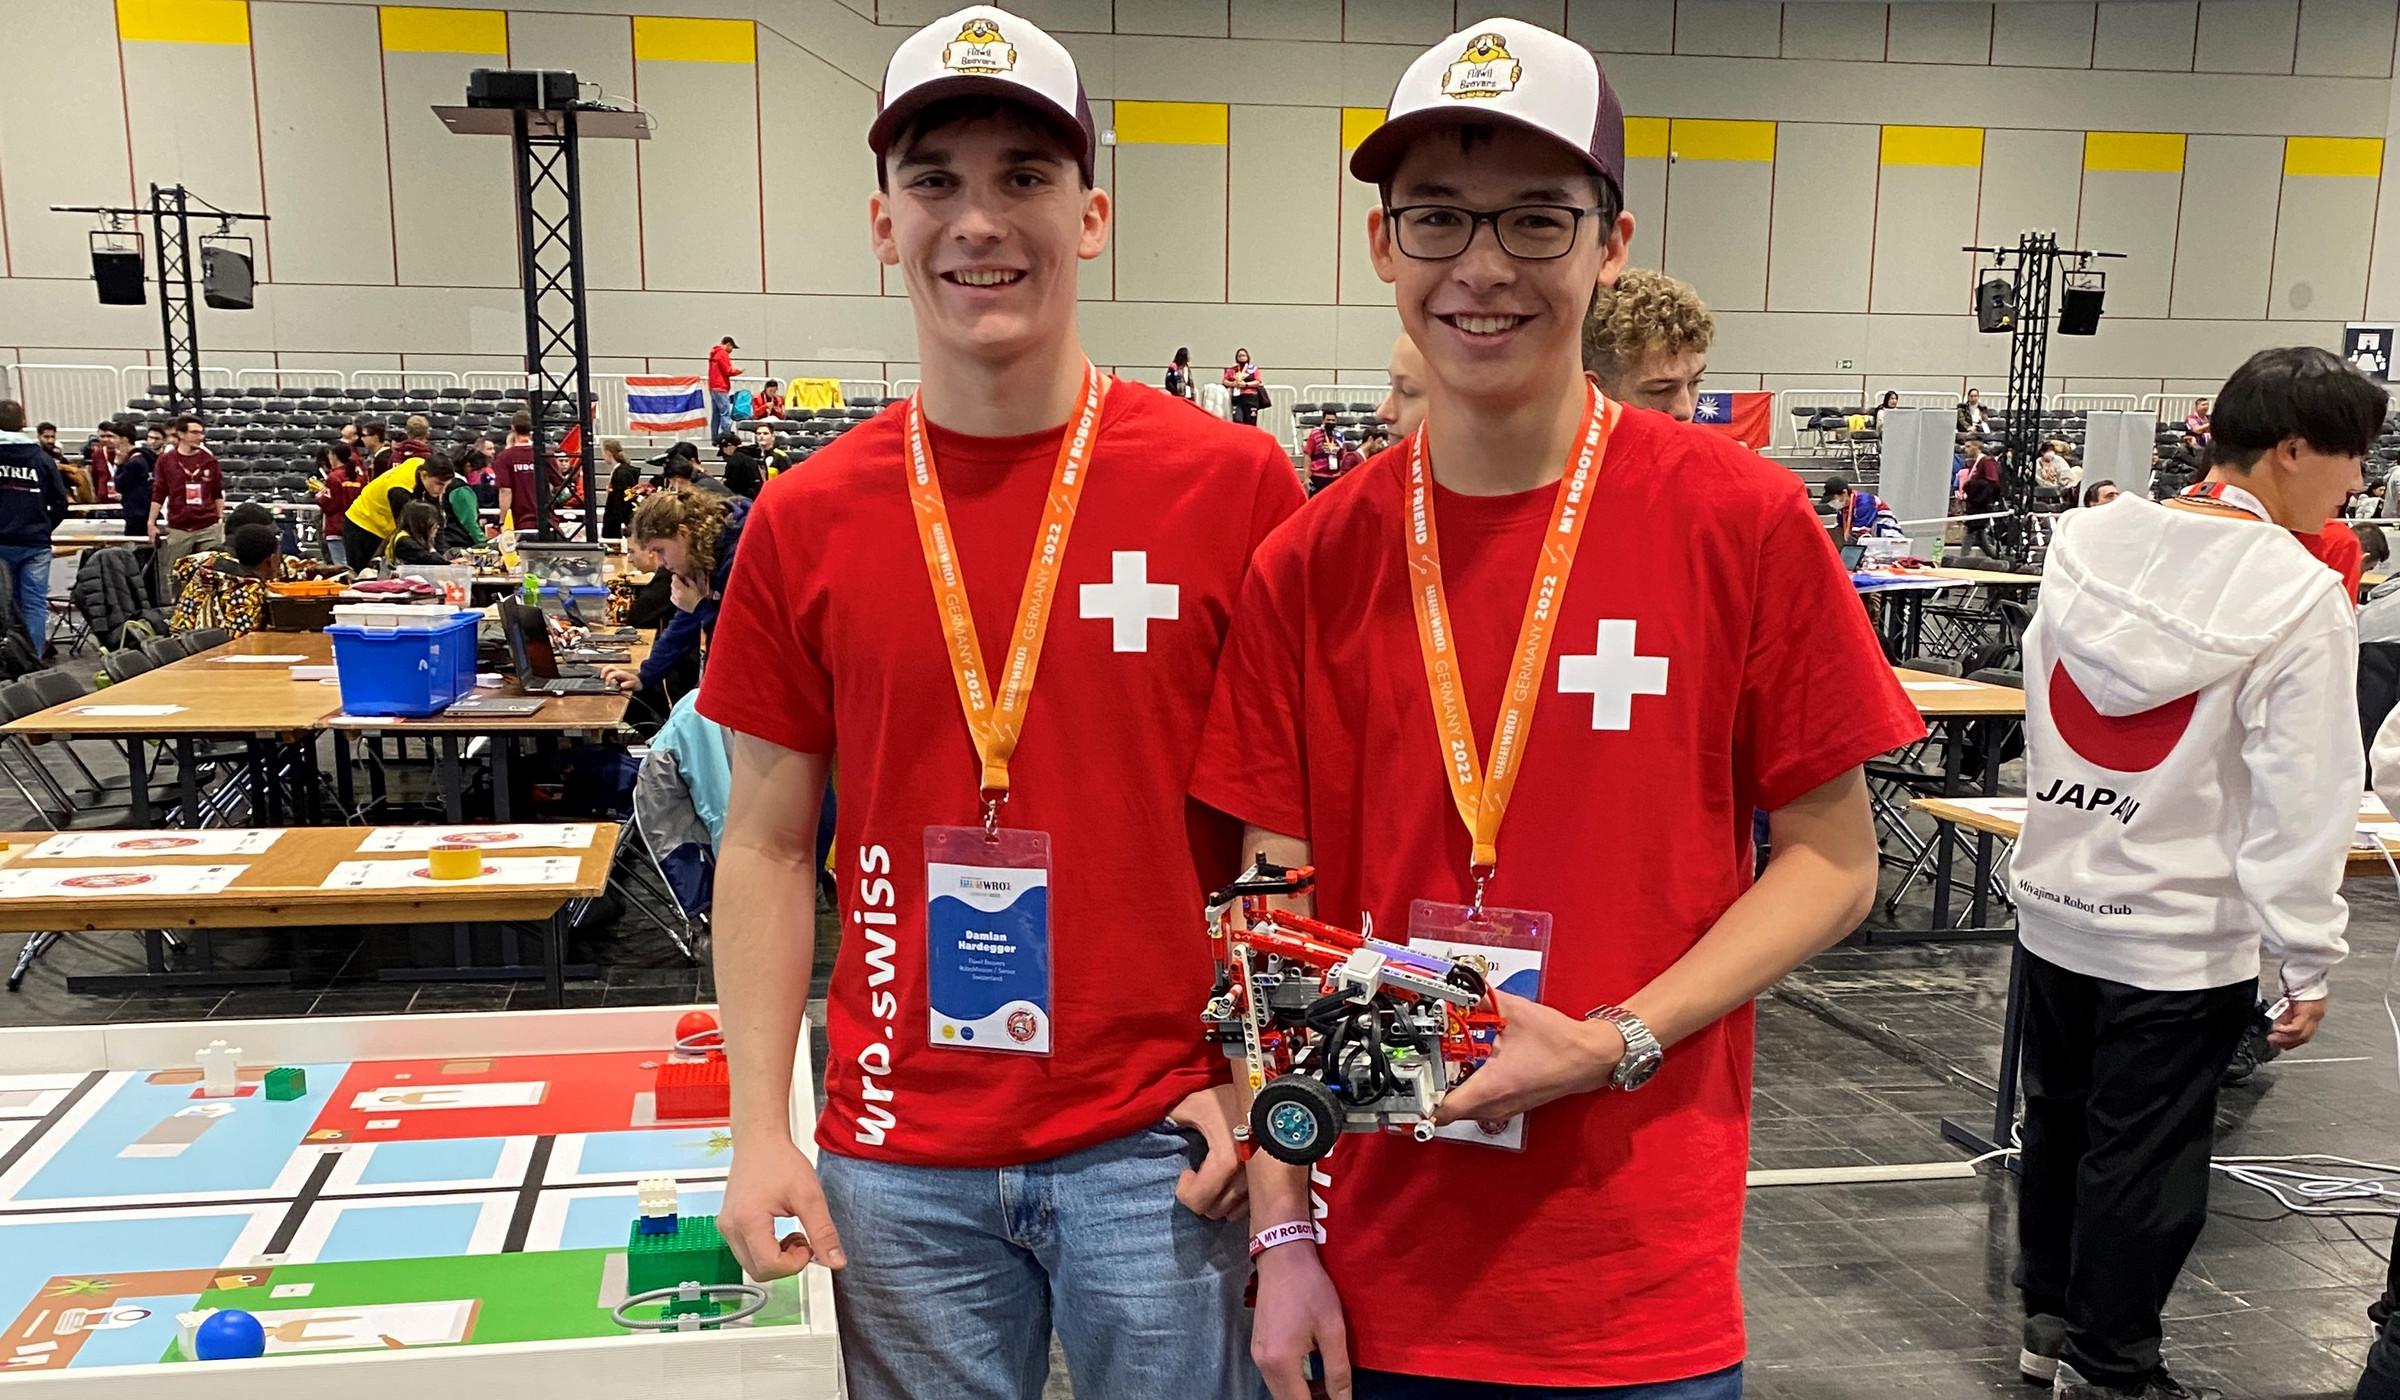 Kantonsschule am Burggraben - World Robot Olympiad